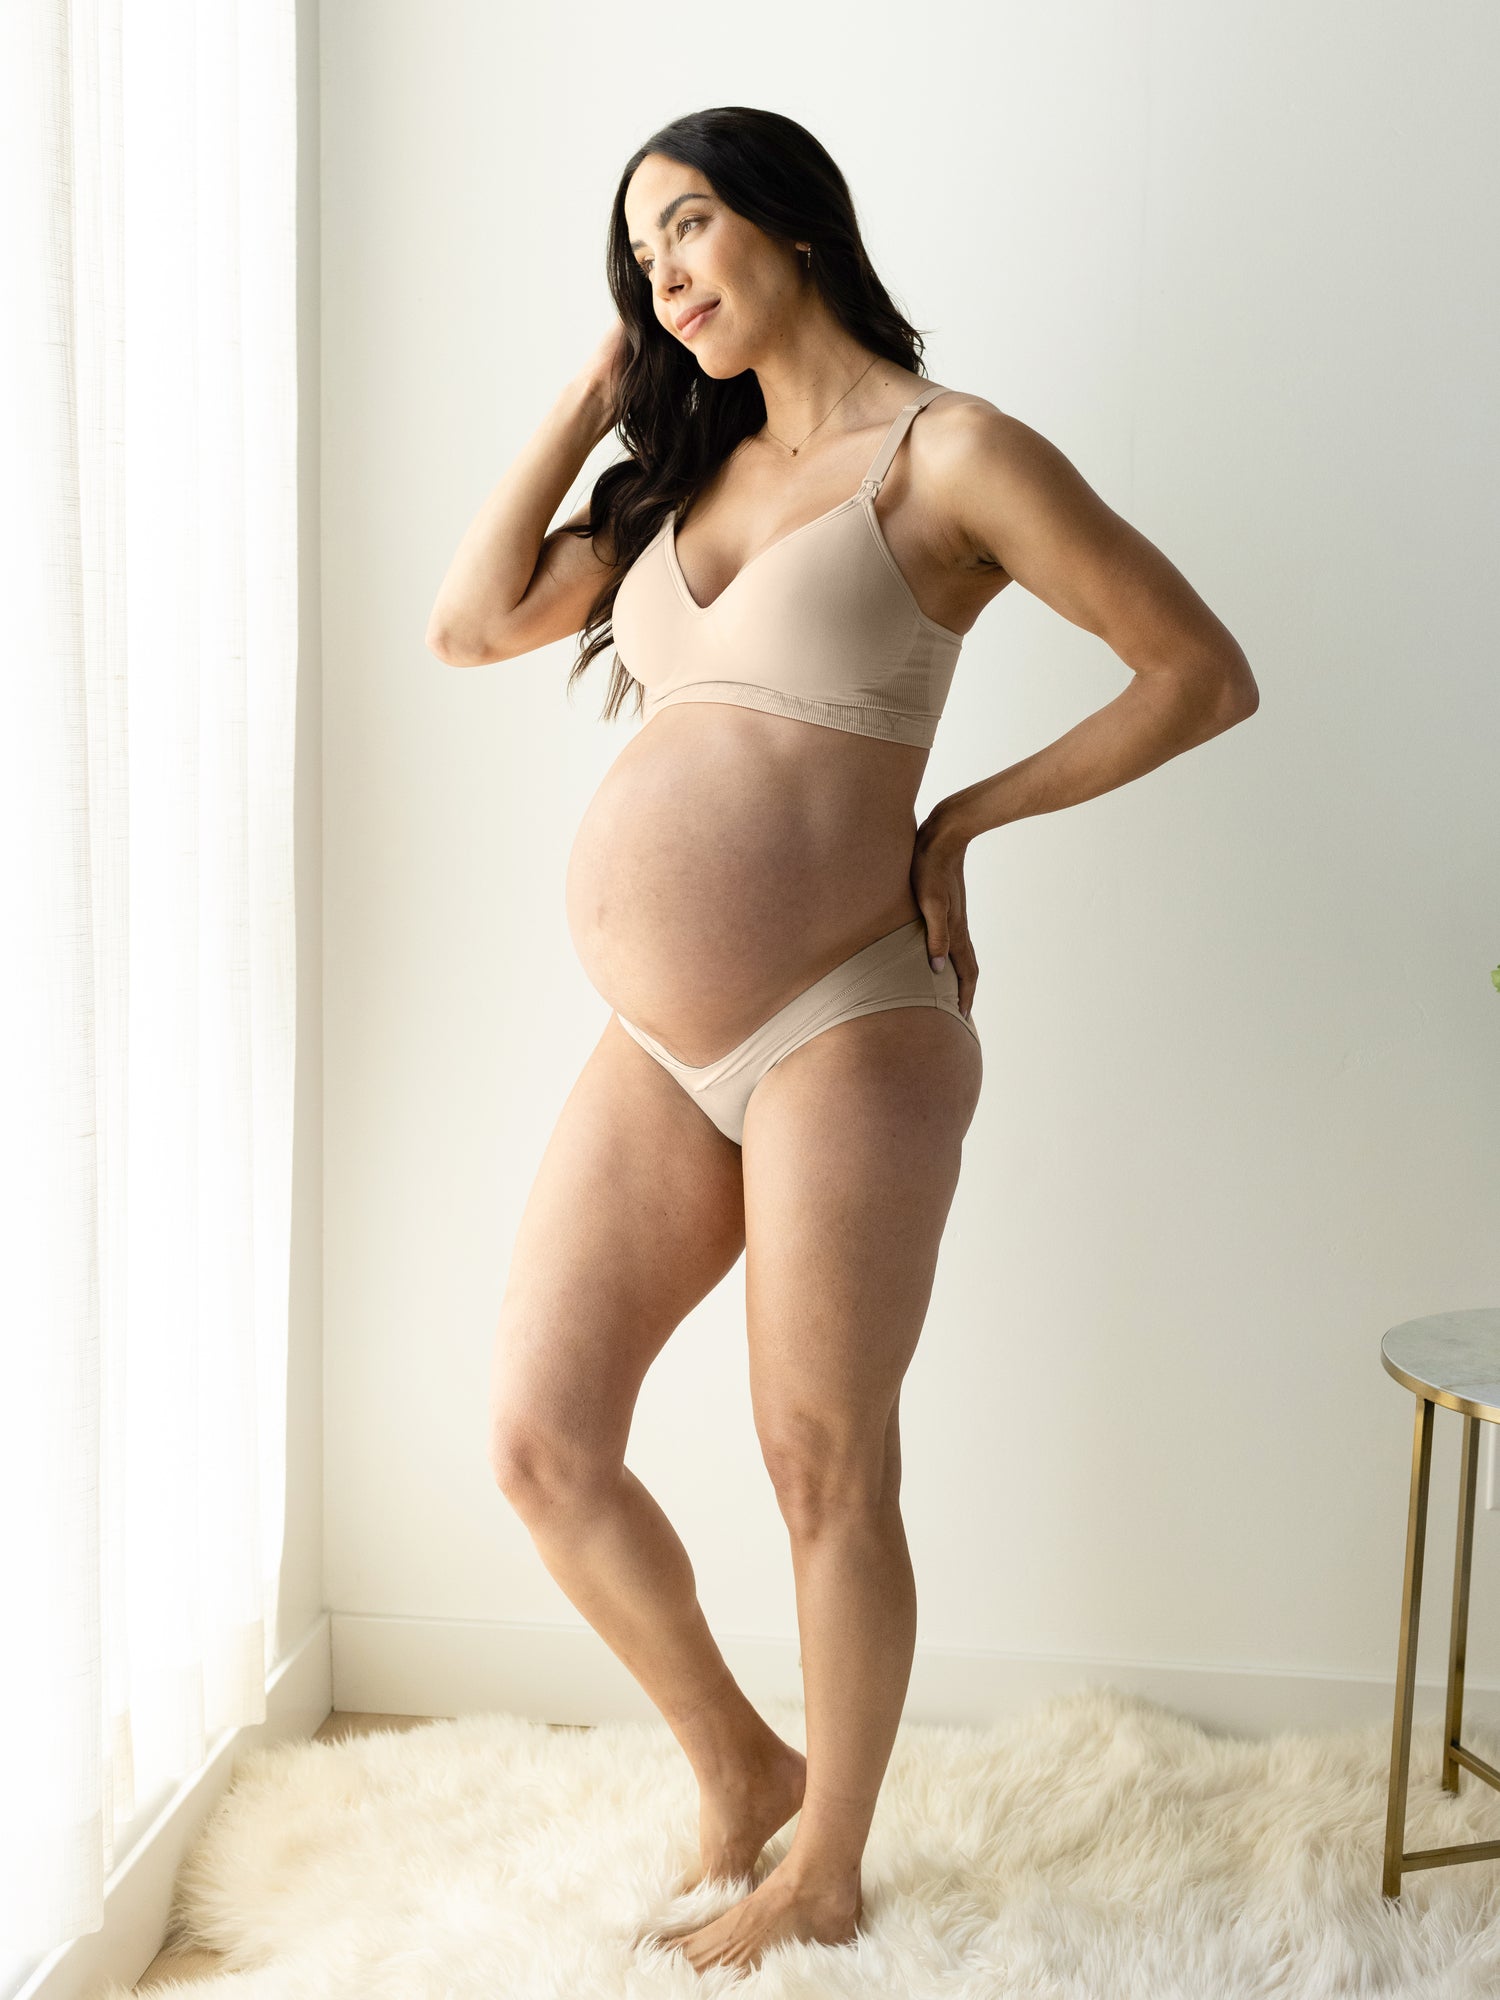 Motherhood Maternity Maternity Over or Under the Bump Underwear